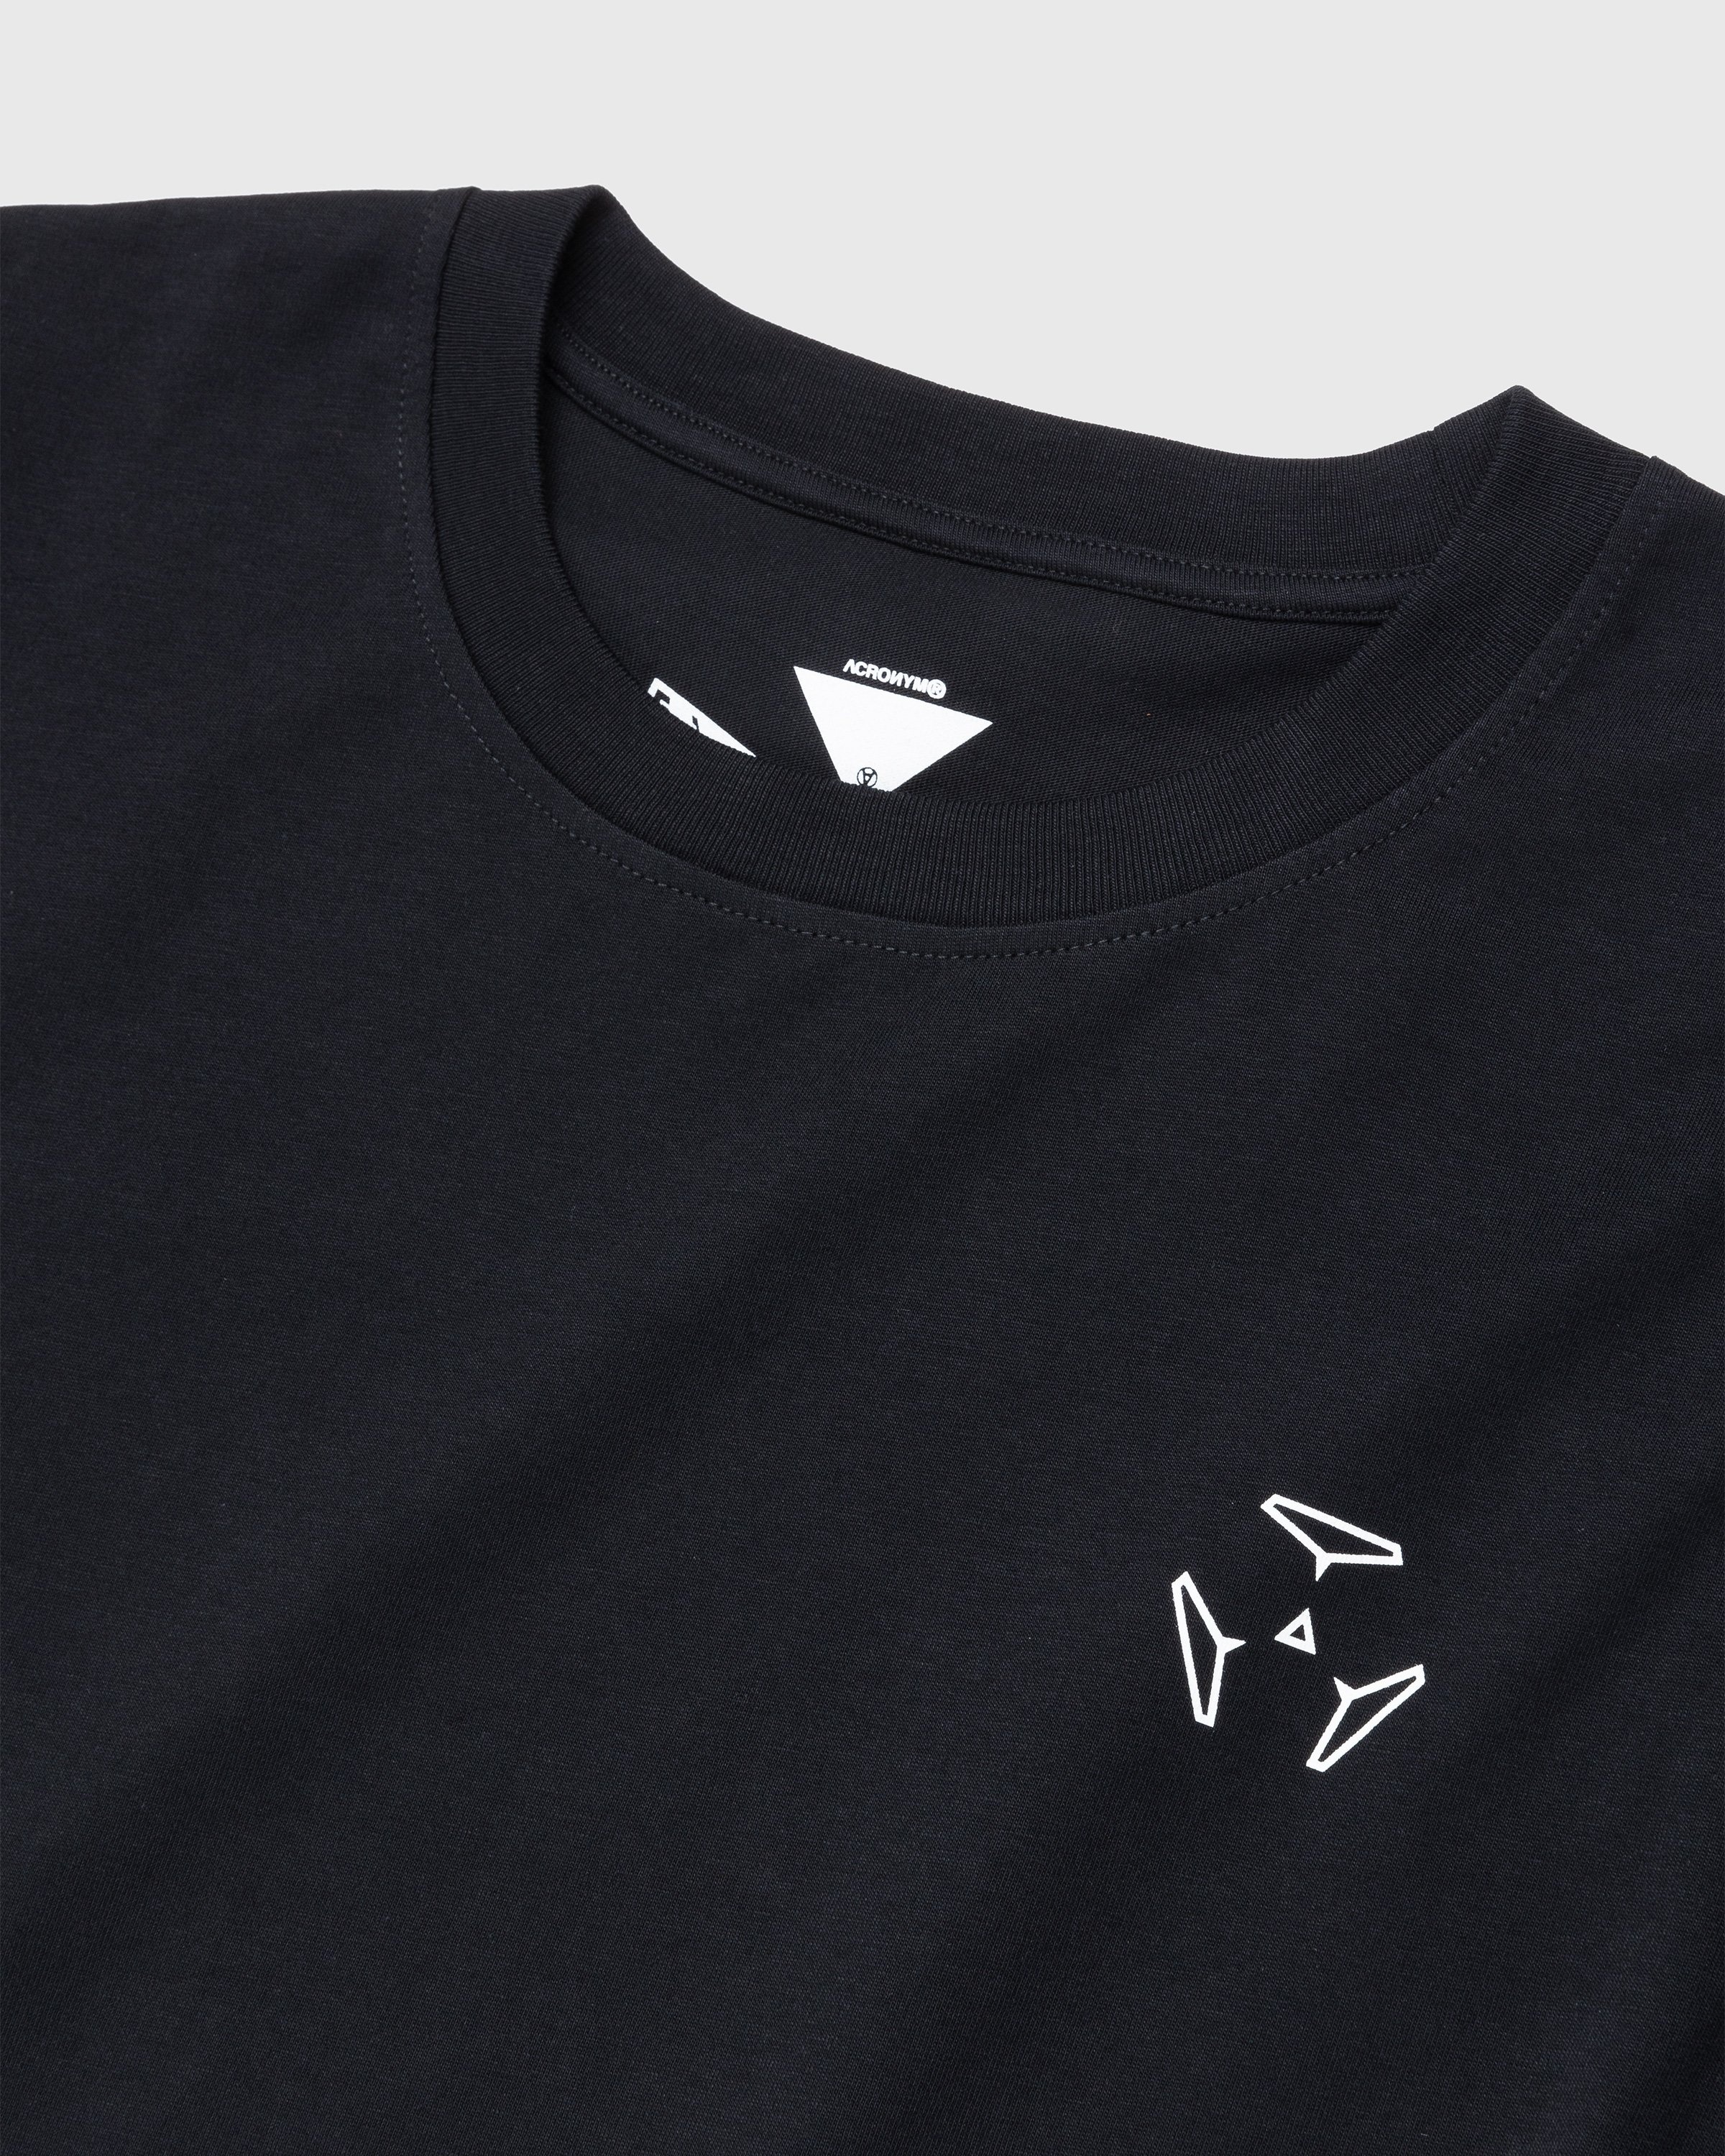 ACRONYM – S29-PR-B Organic Cotton Longsleeve T-Shirt Black - Longsleeves - Black - Image 6